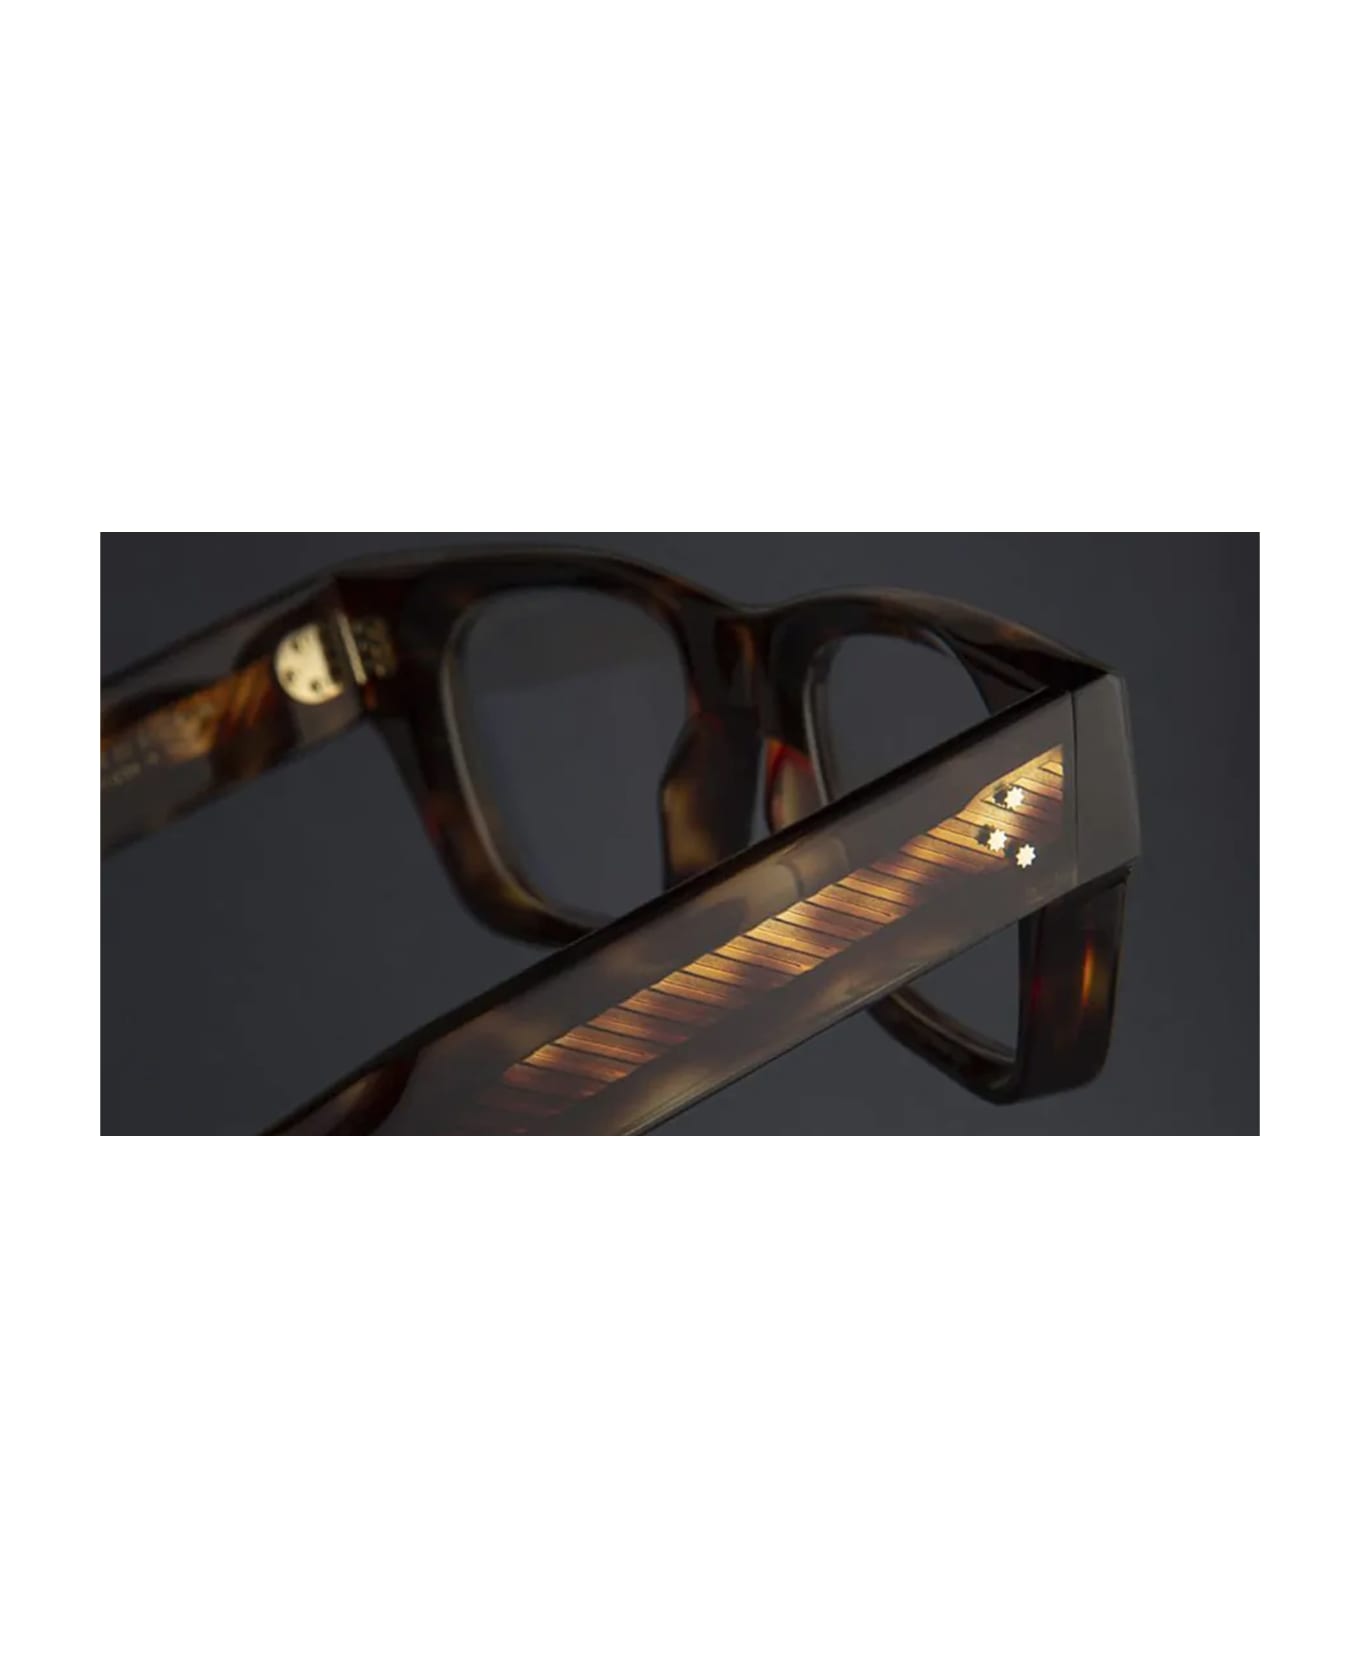 Cutler and Gross 9690 / Dark Turtle Sunglasses - brown サングラス